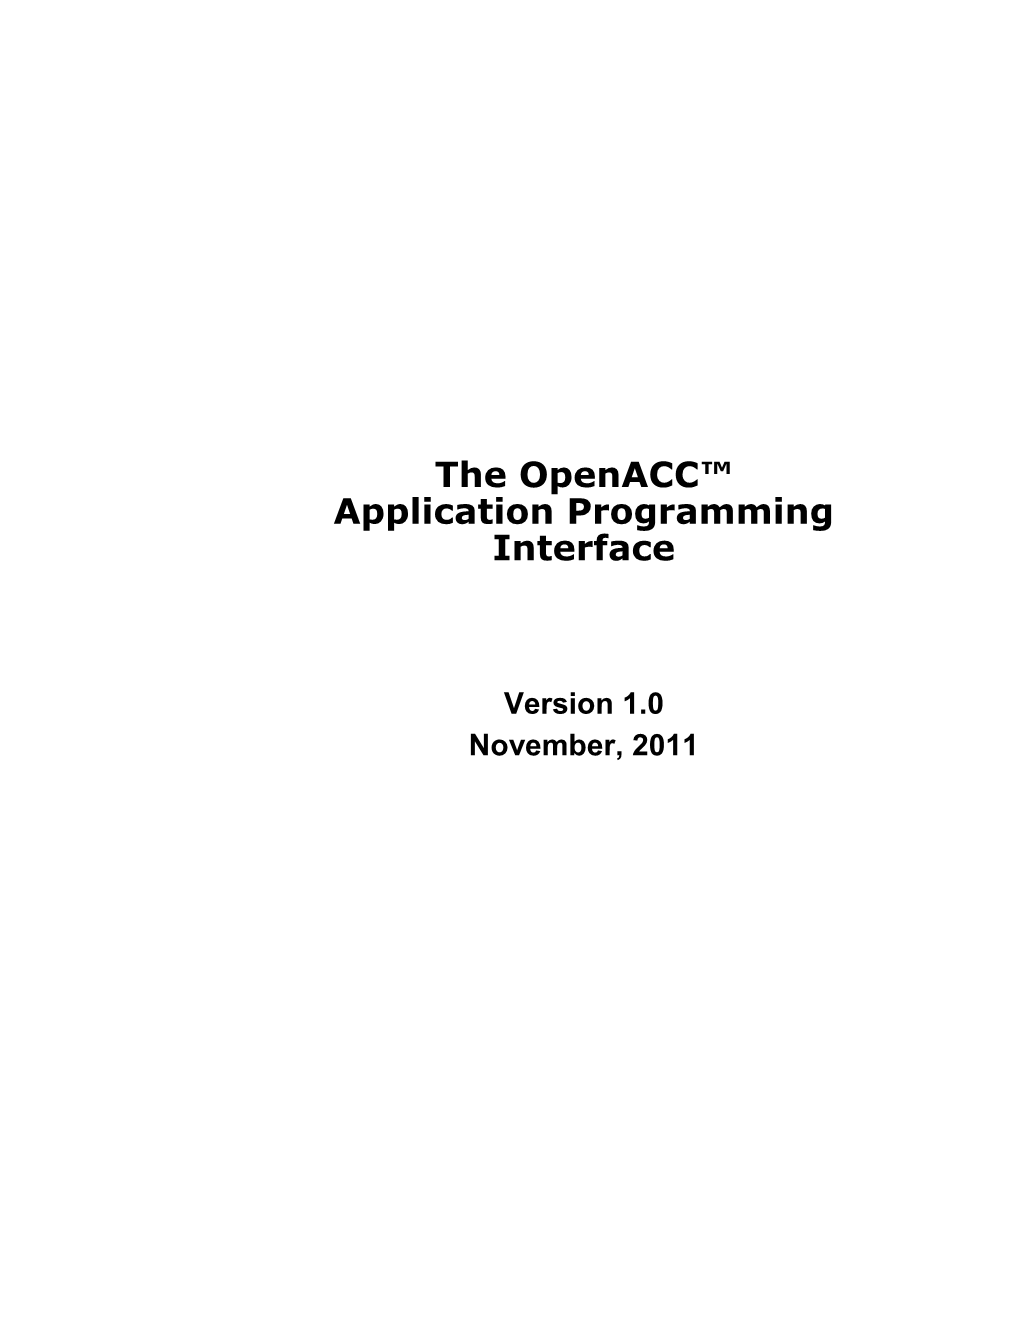 Openacc Application Programming Interface